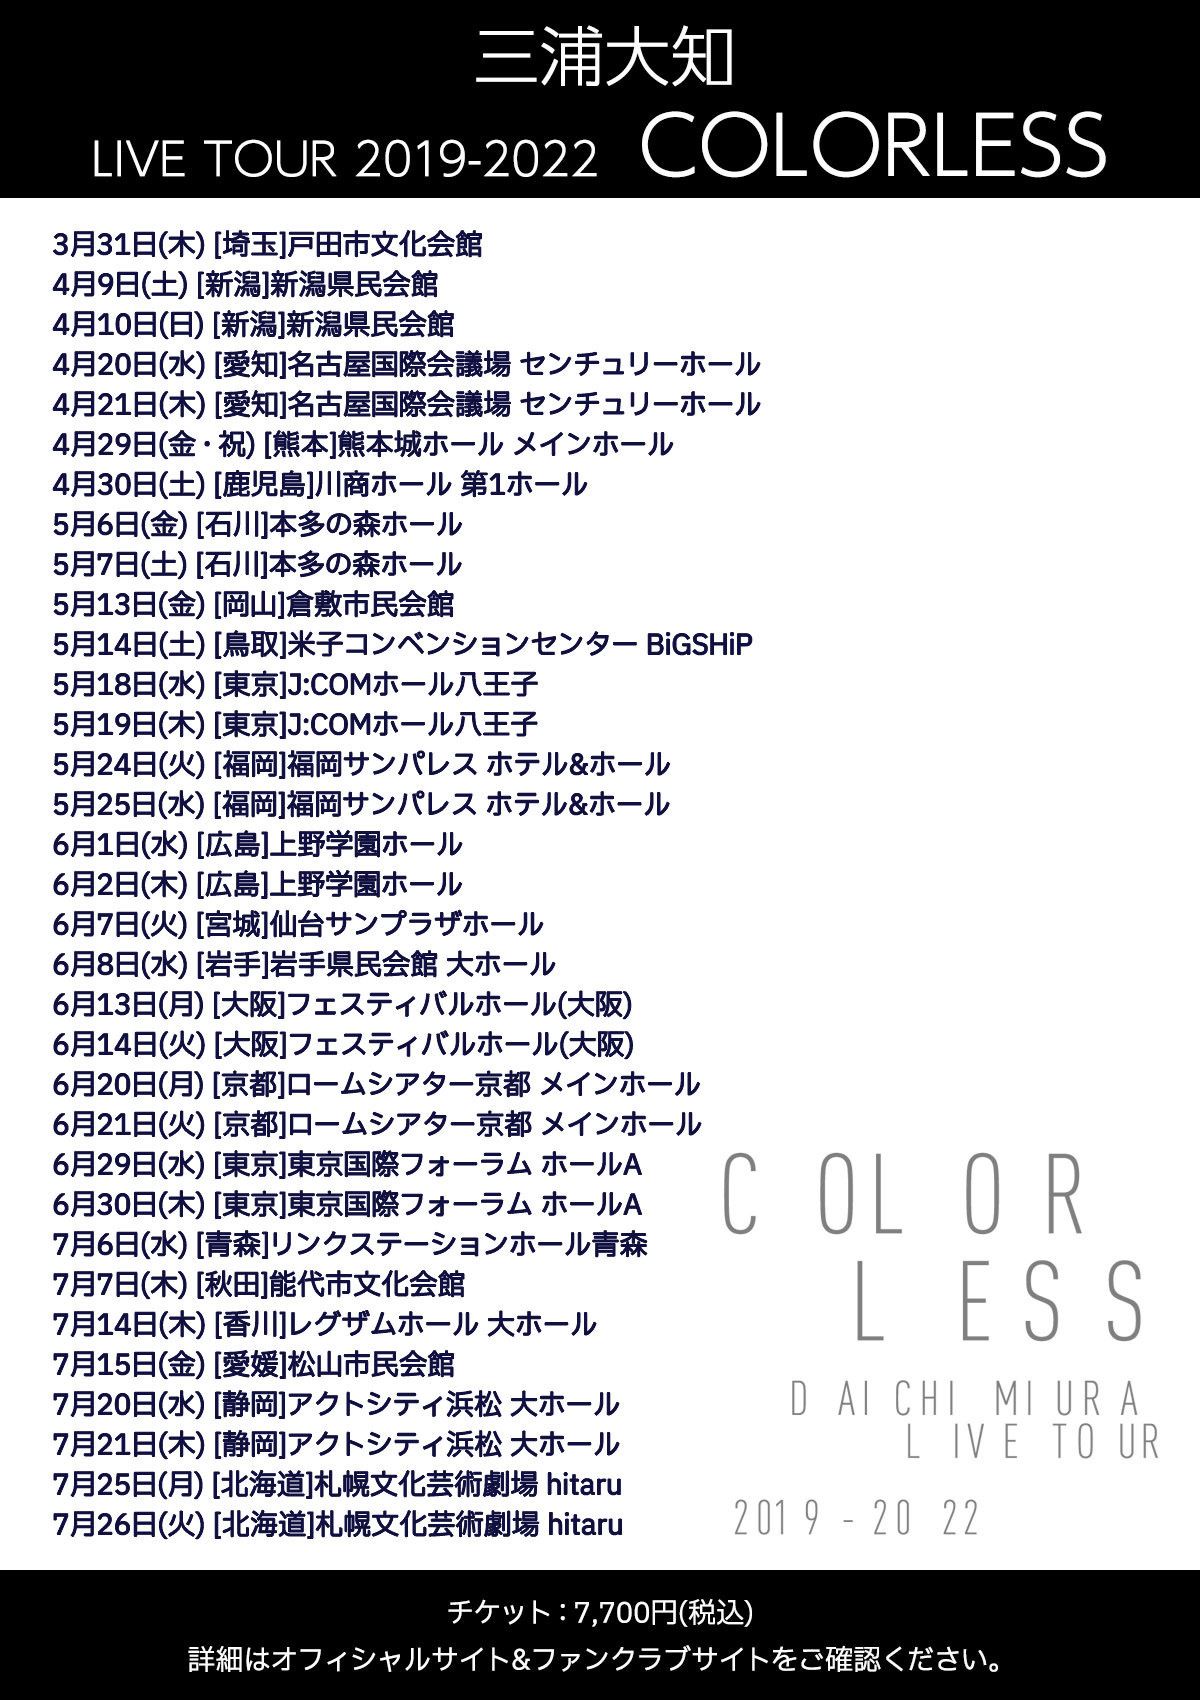 『DAICHI MIURA LIVE TOUR 2019-2022 COLORLESS』告知画像